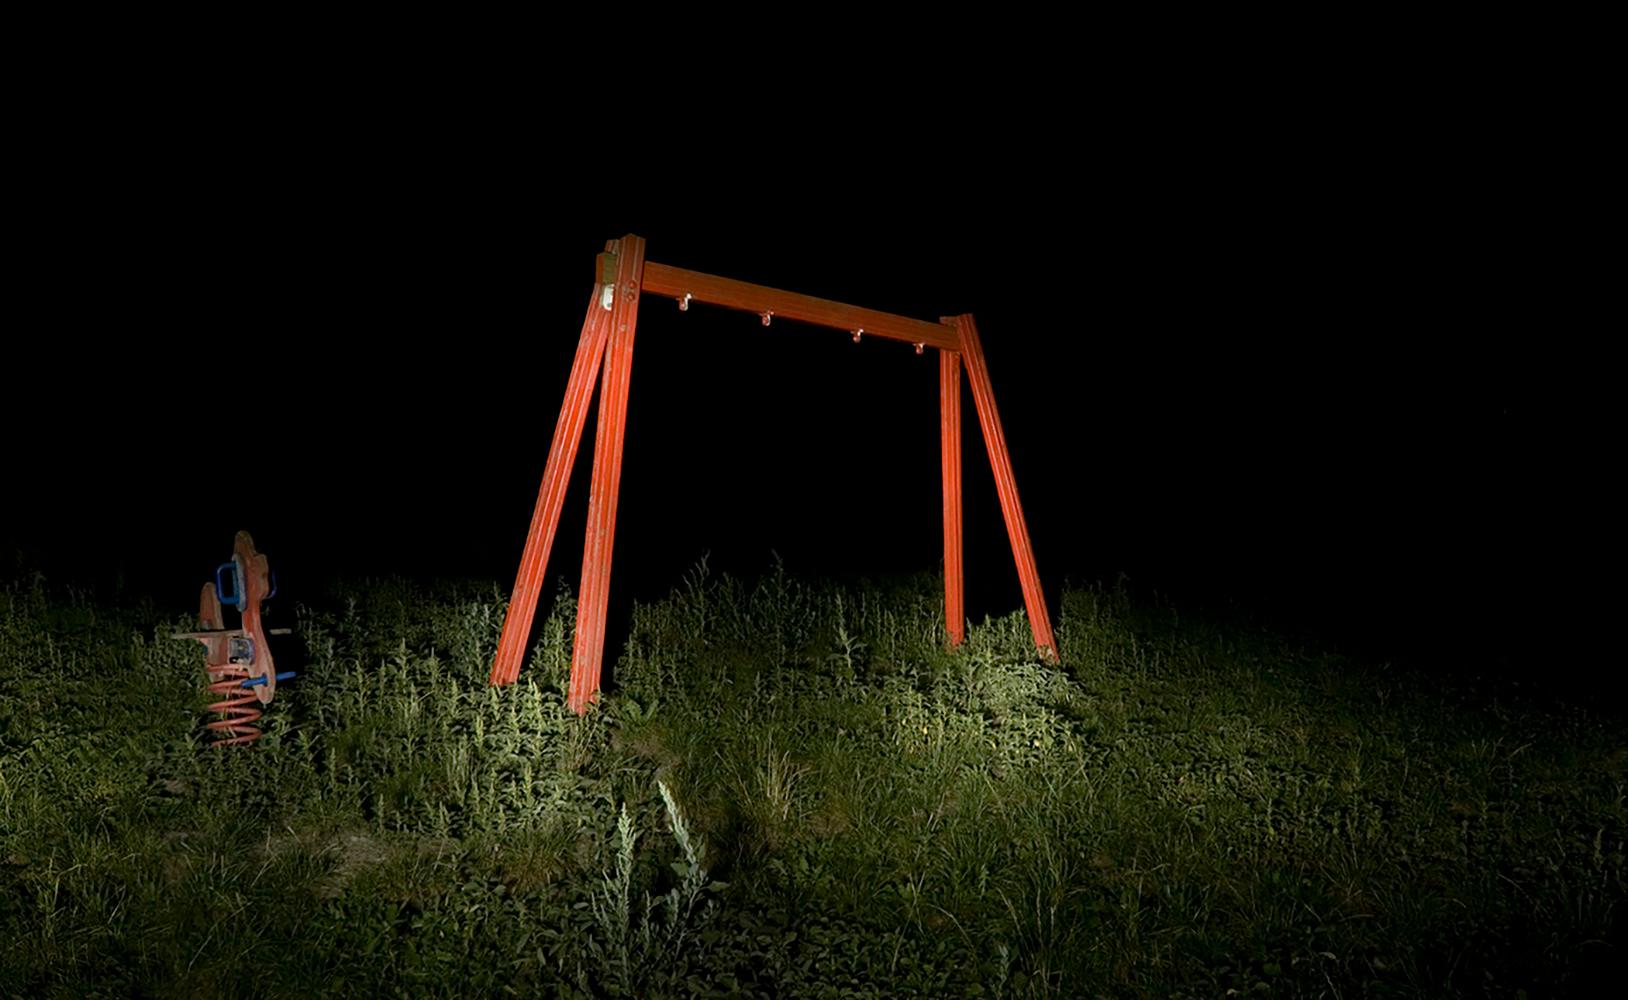 Cristina Fontsare Landscape Photograph - The red Swing - Contemporary, Landscape, 21st Century, Color, Night